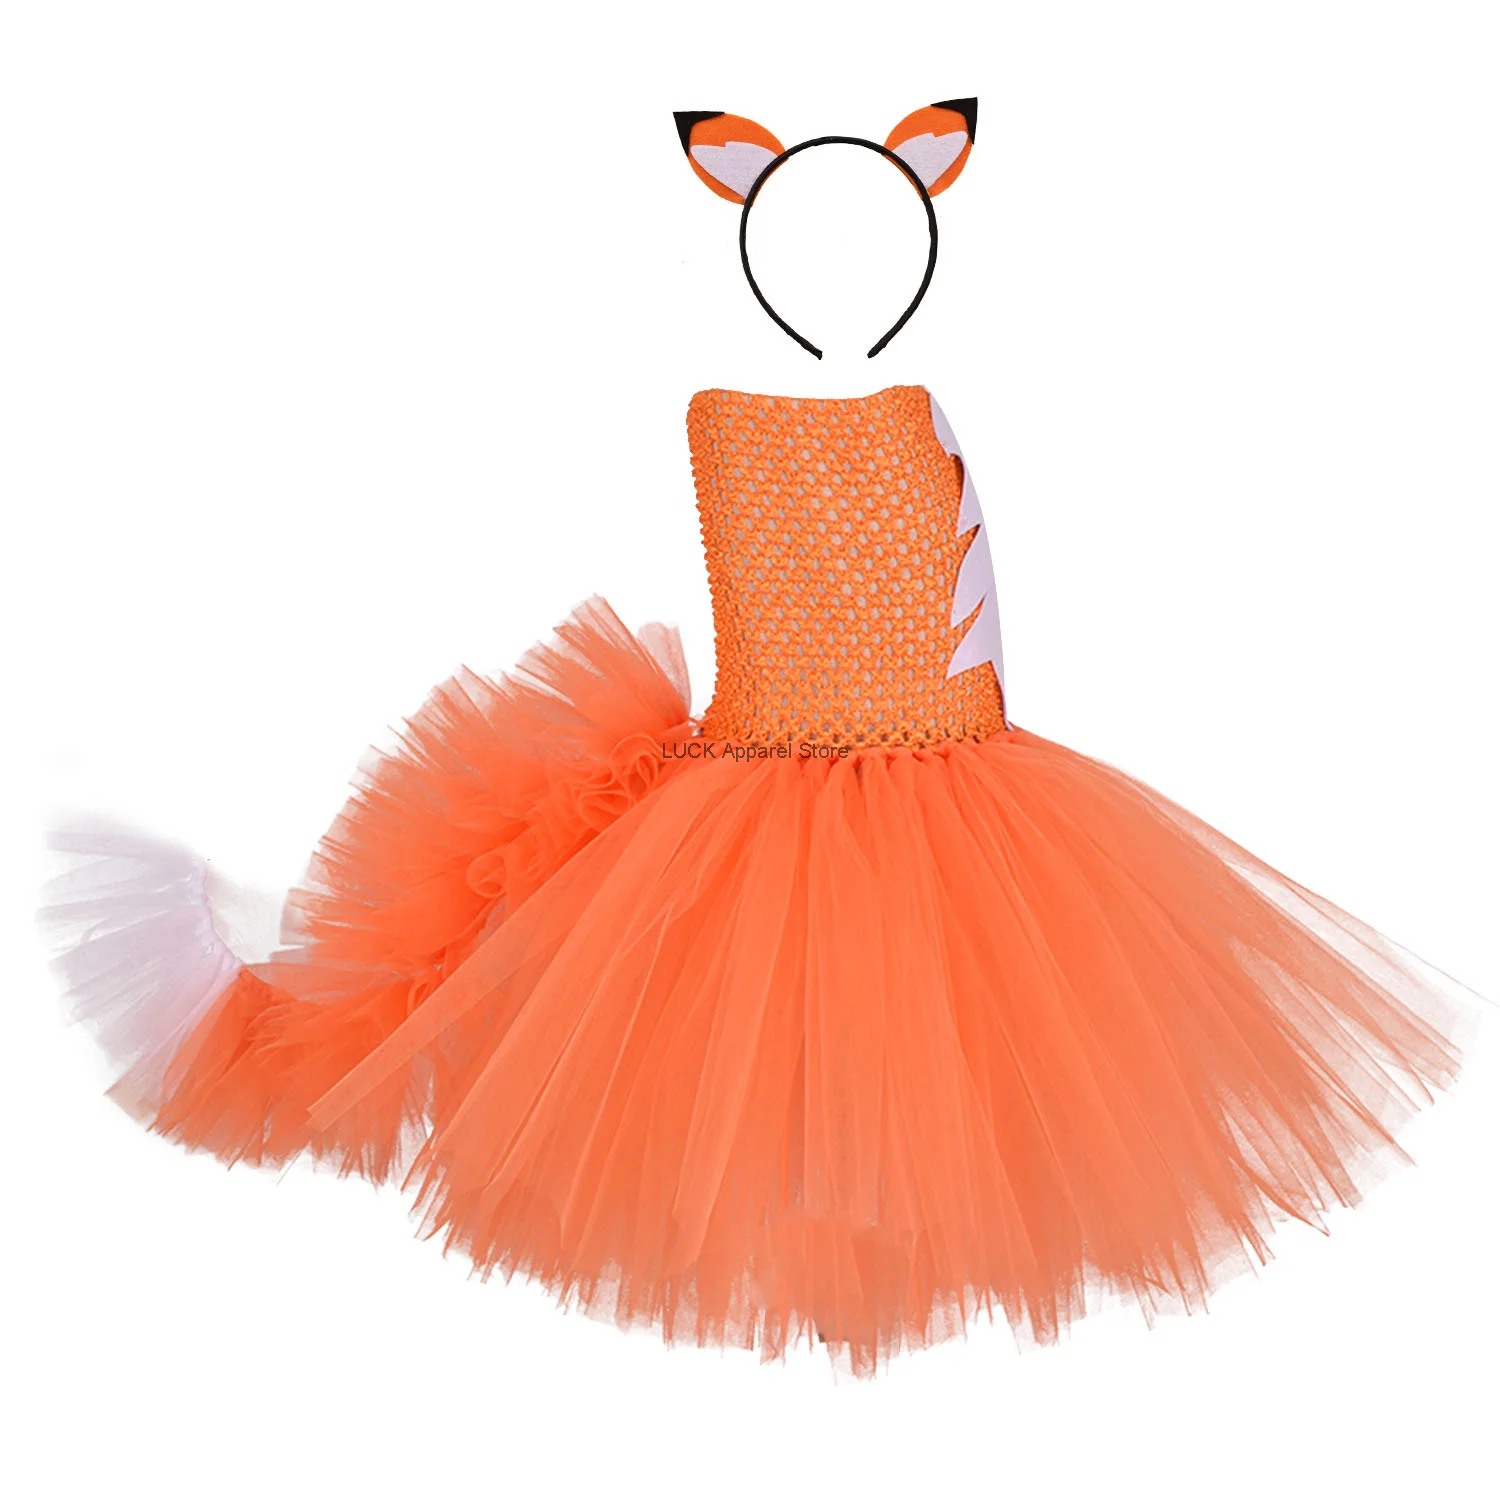 

Children's Day Fox Cosplay Dress Girl's Cartoon Fox Costume Cute Tutu Dress Halloween Role Play With Hair Hoops